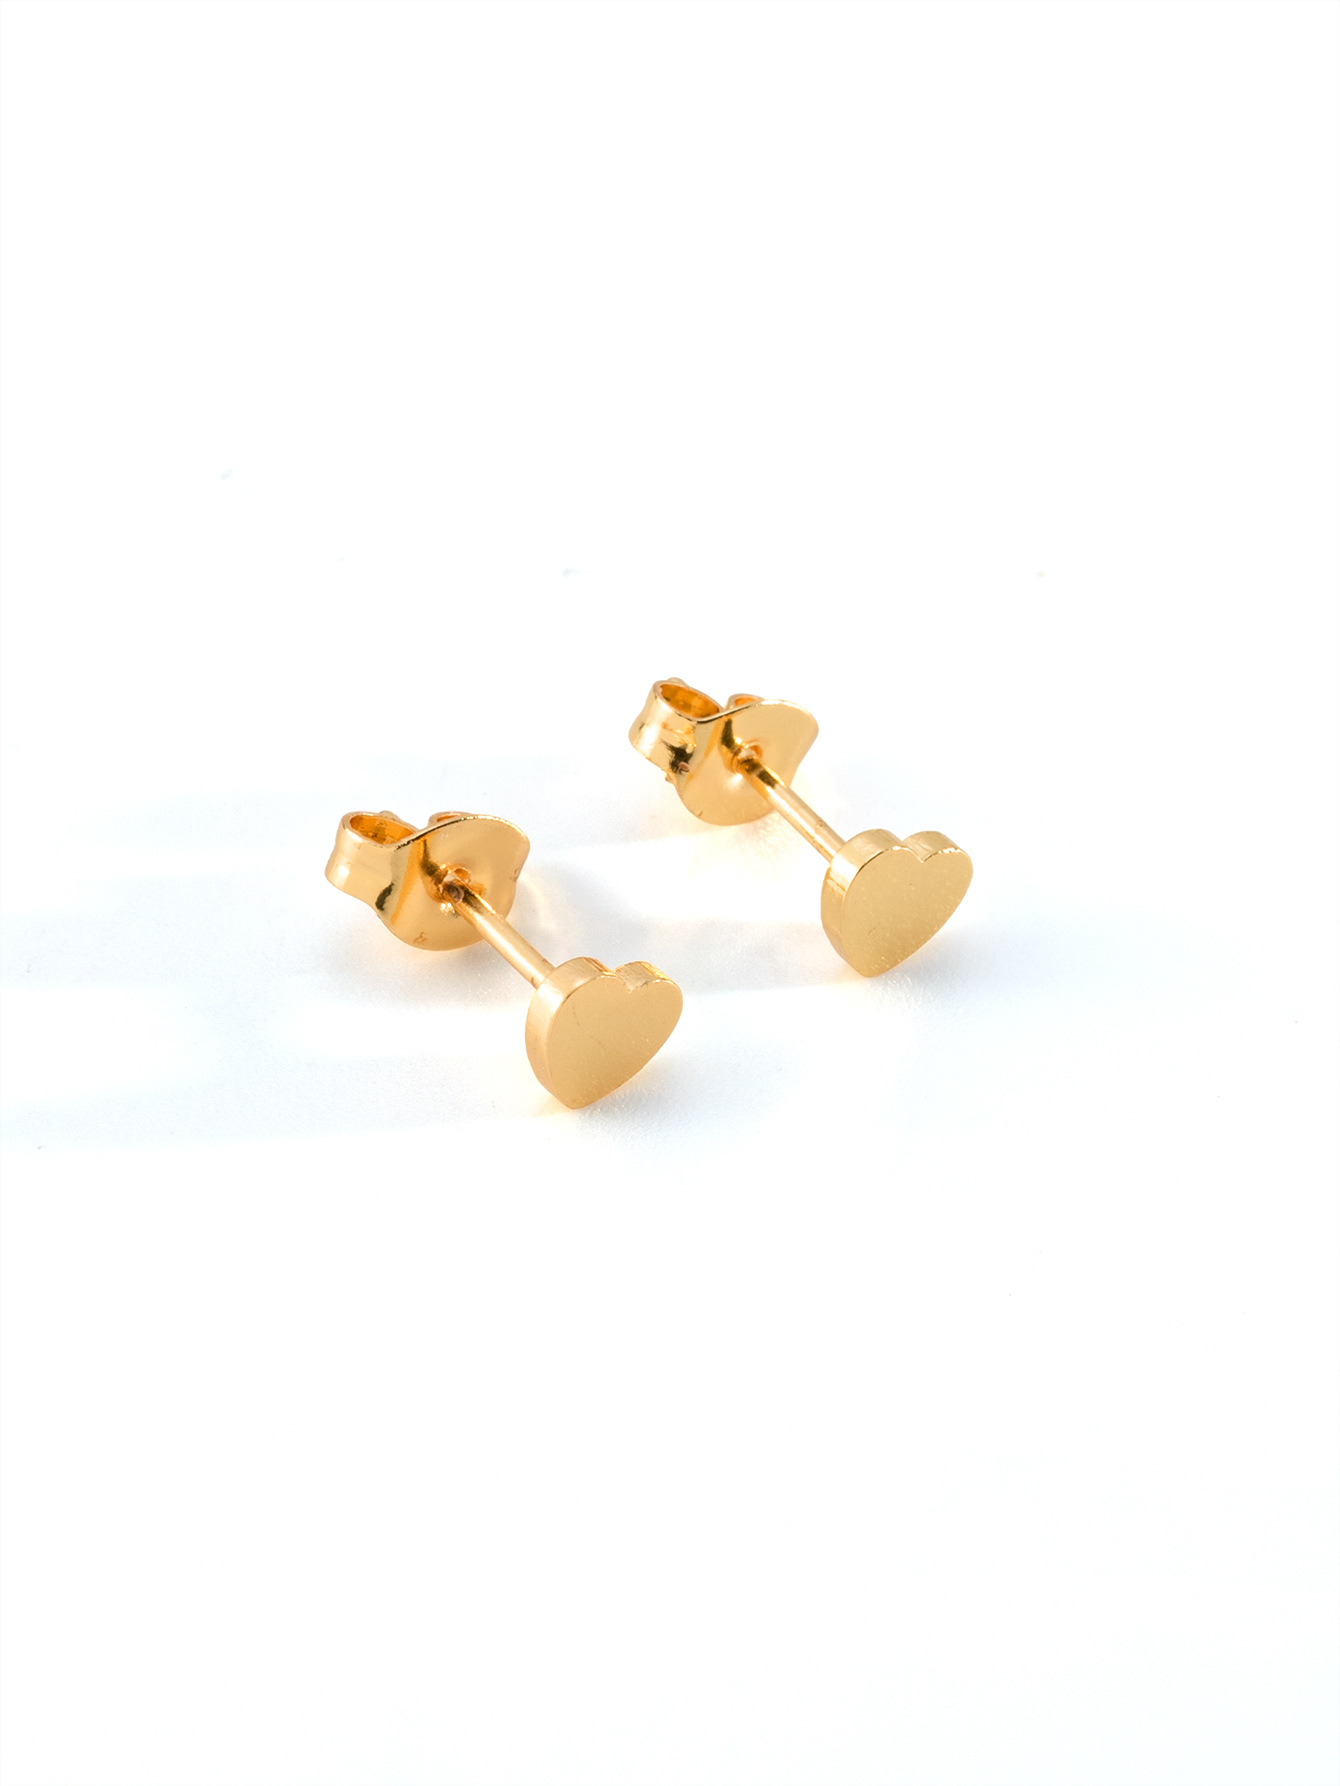 10:Love stud earrings golden